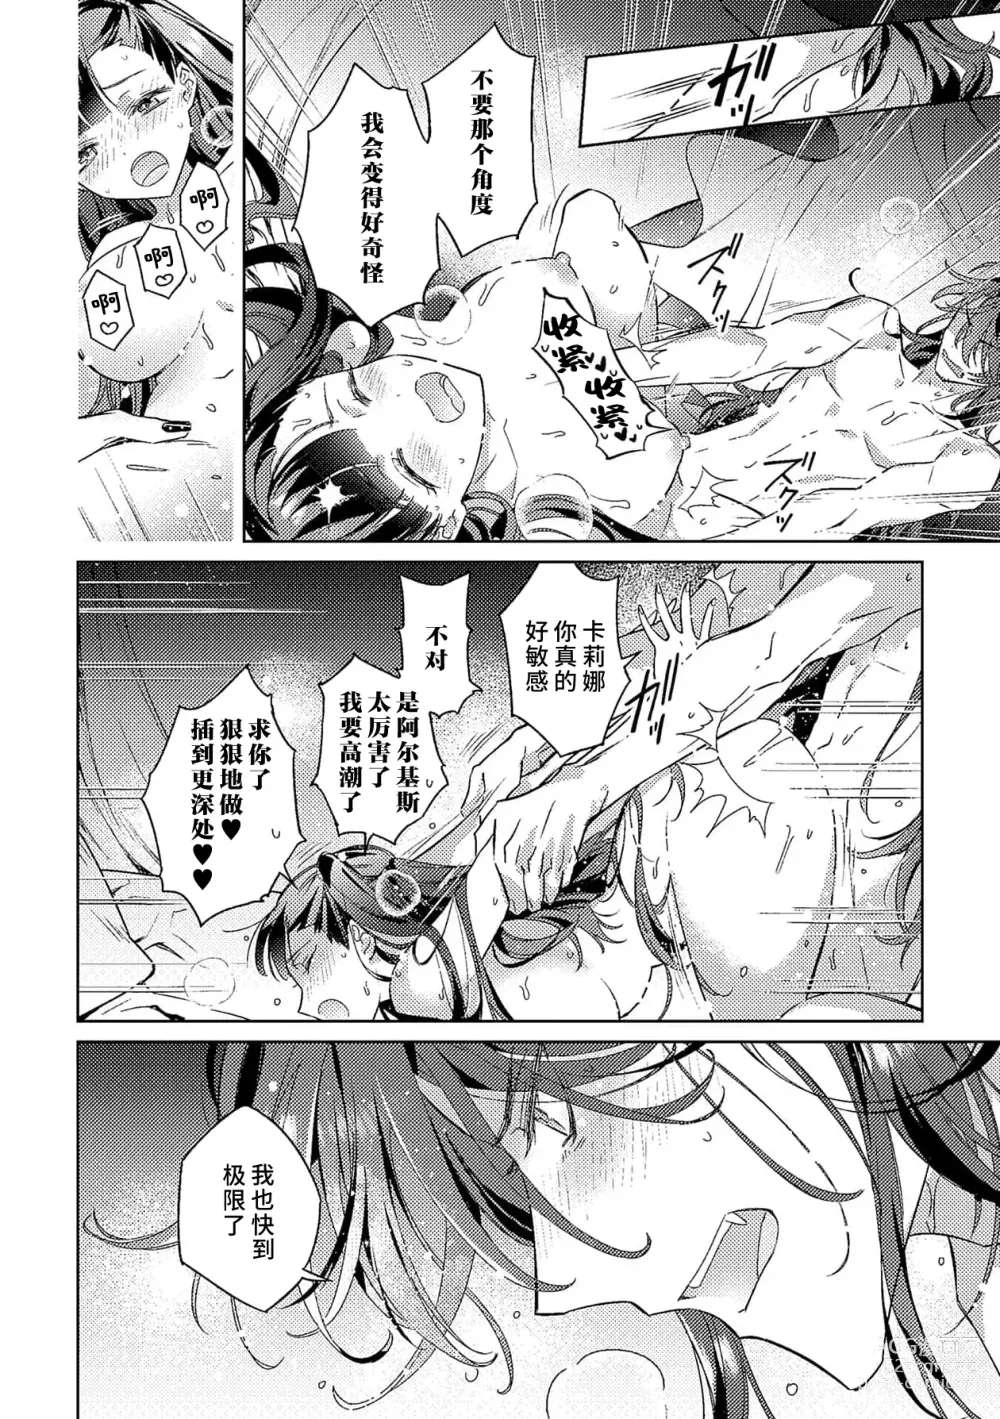 Page 199 of manga 身为恶役千金，堕落于魔界王子身下这条路线真的可以有？ 1-7